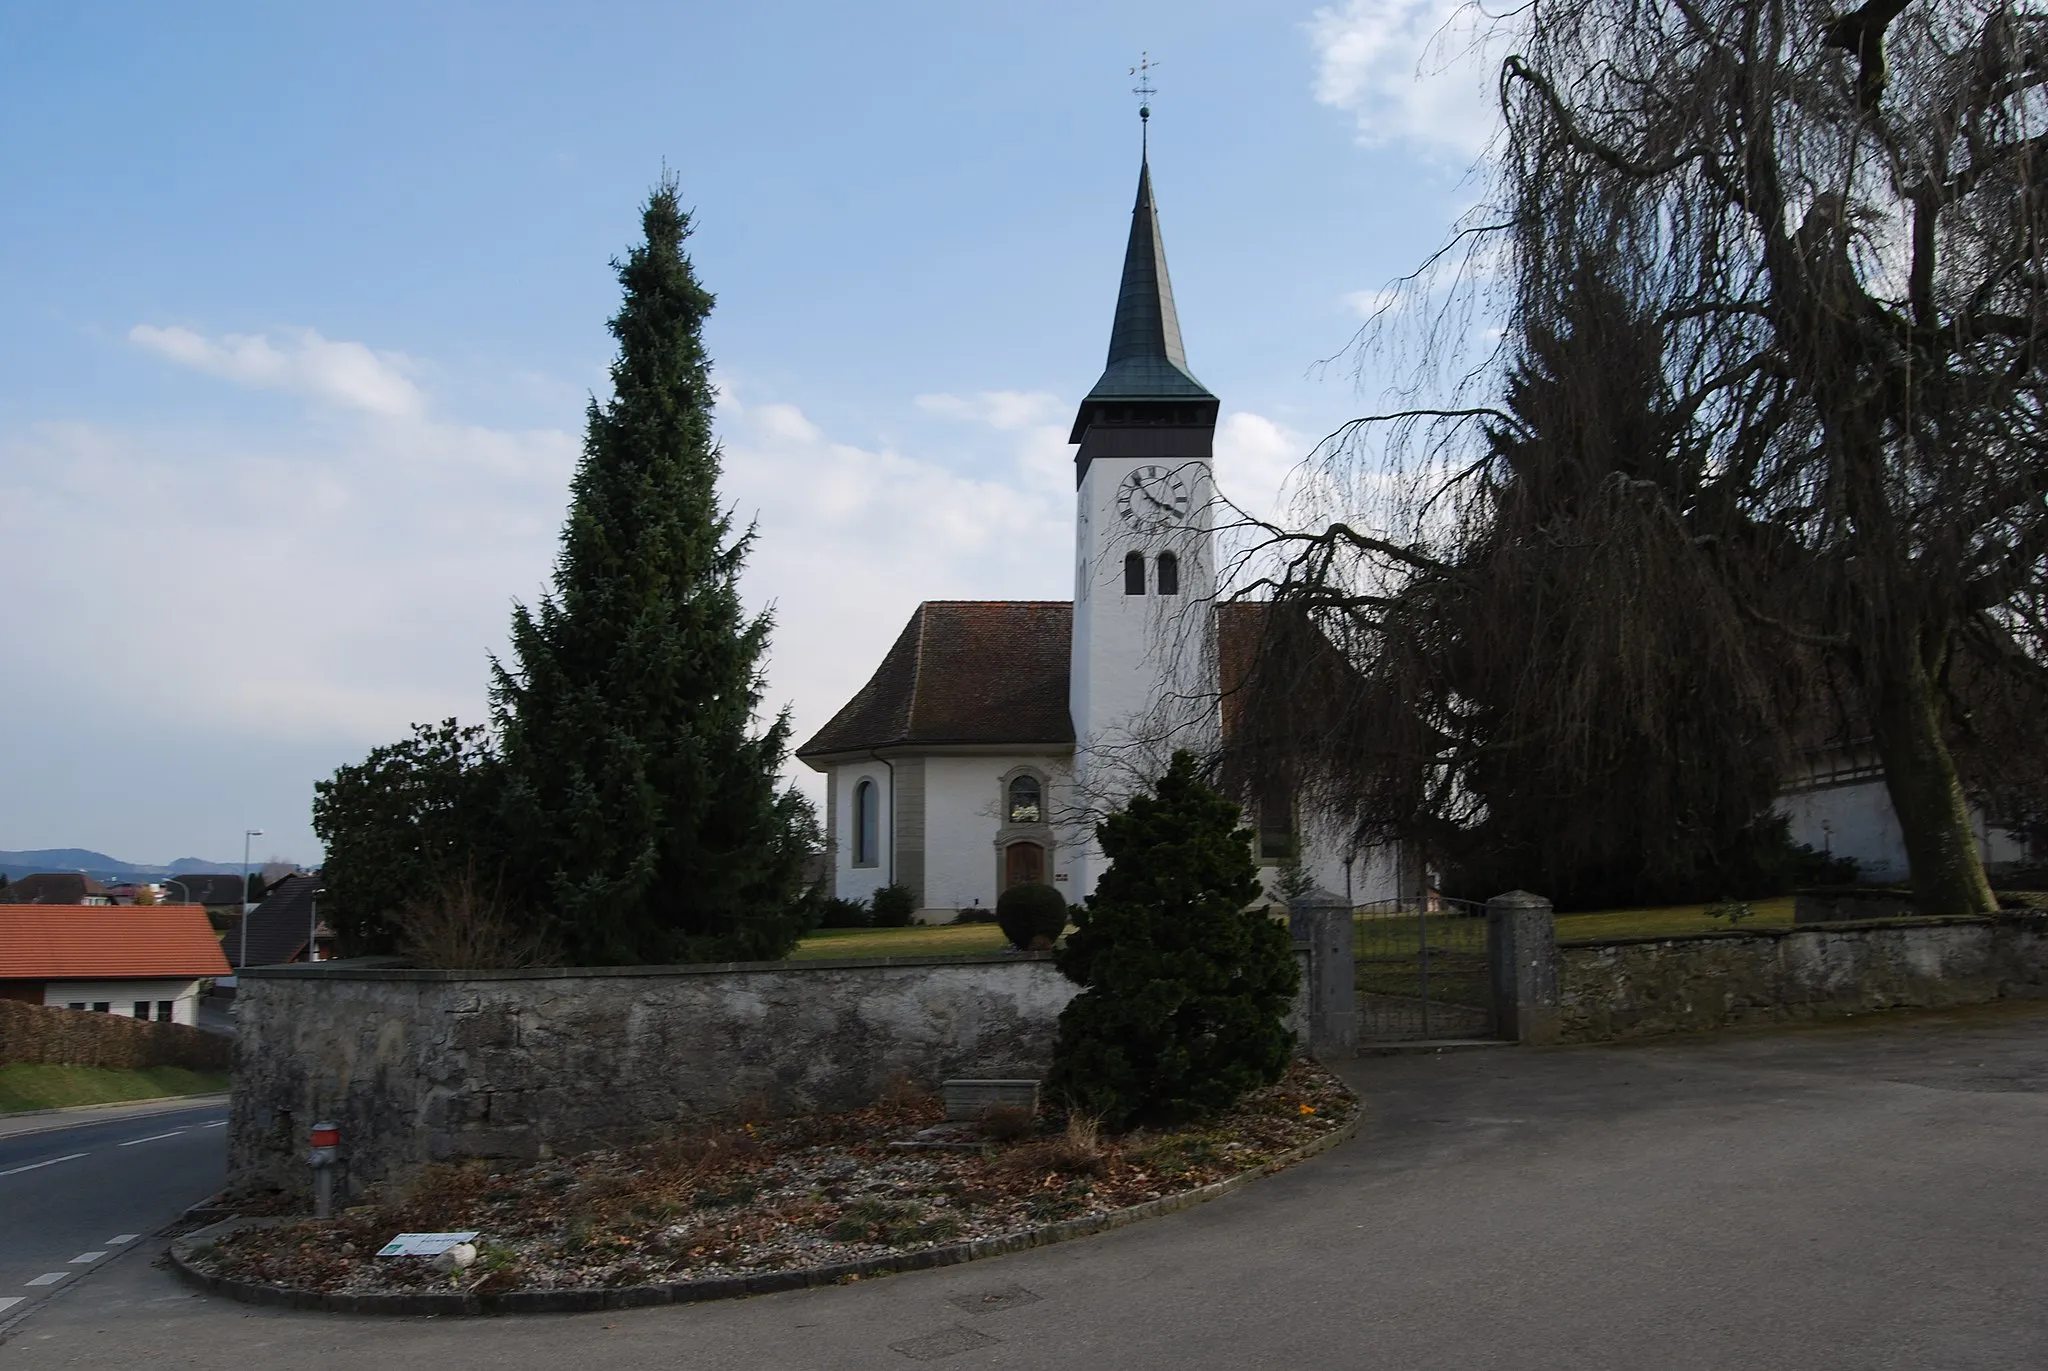 Photo showing: Protestant church of Thunstetten, canton of Bern, Switzerland